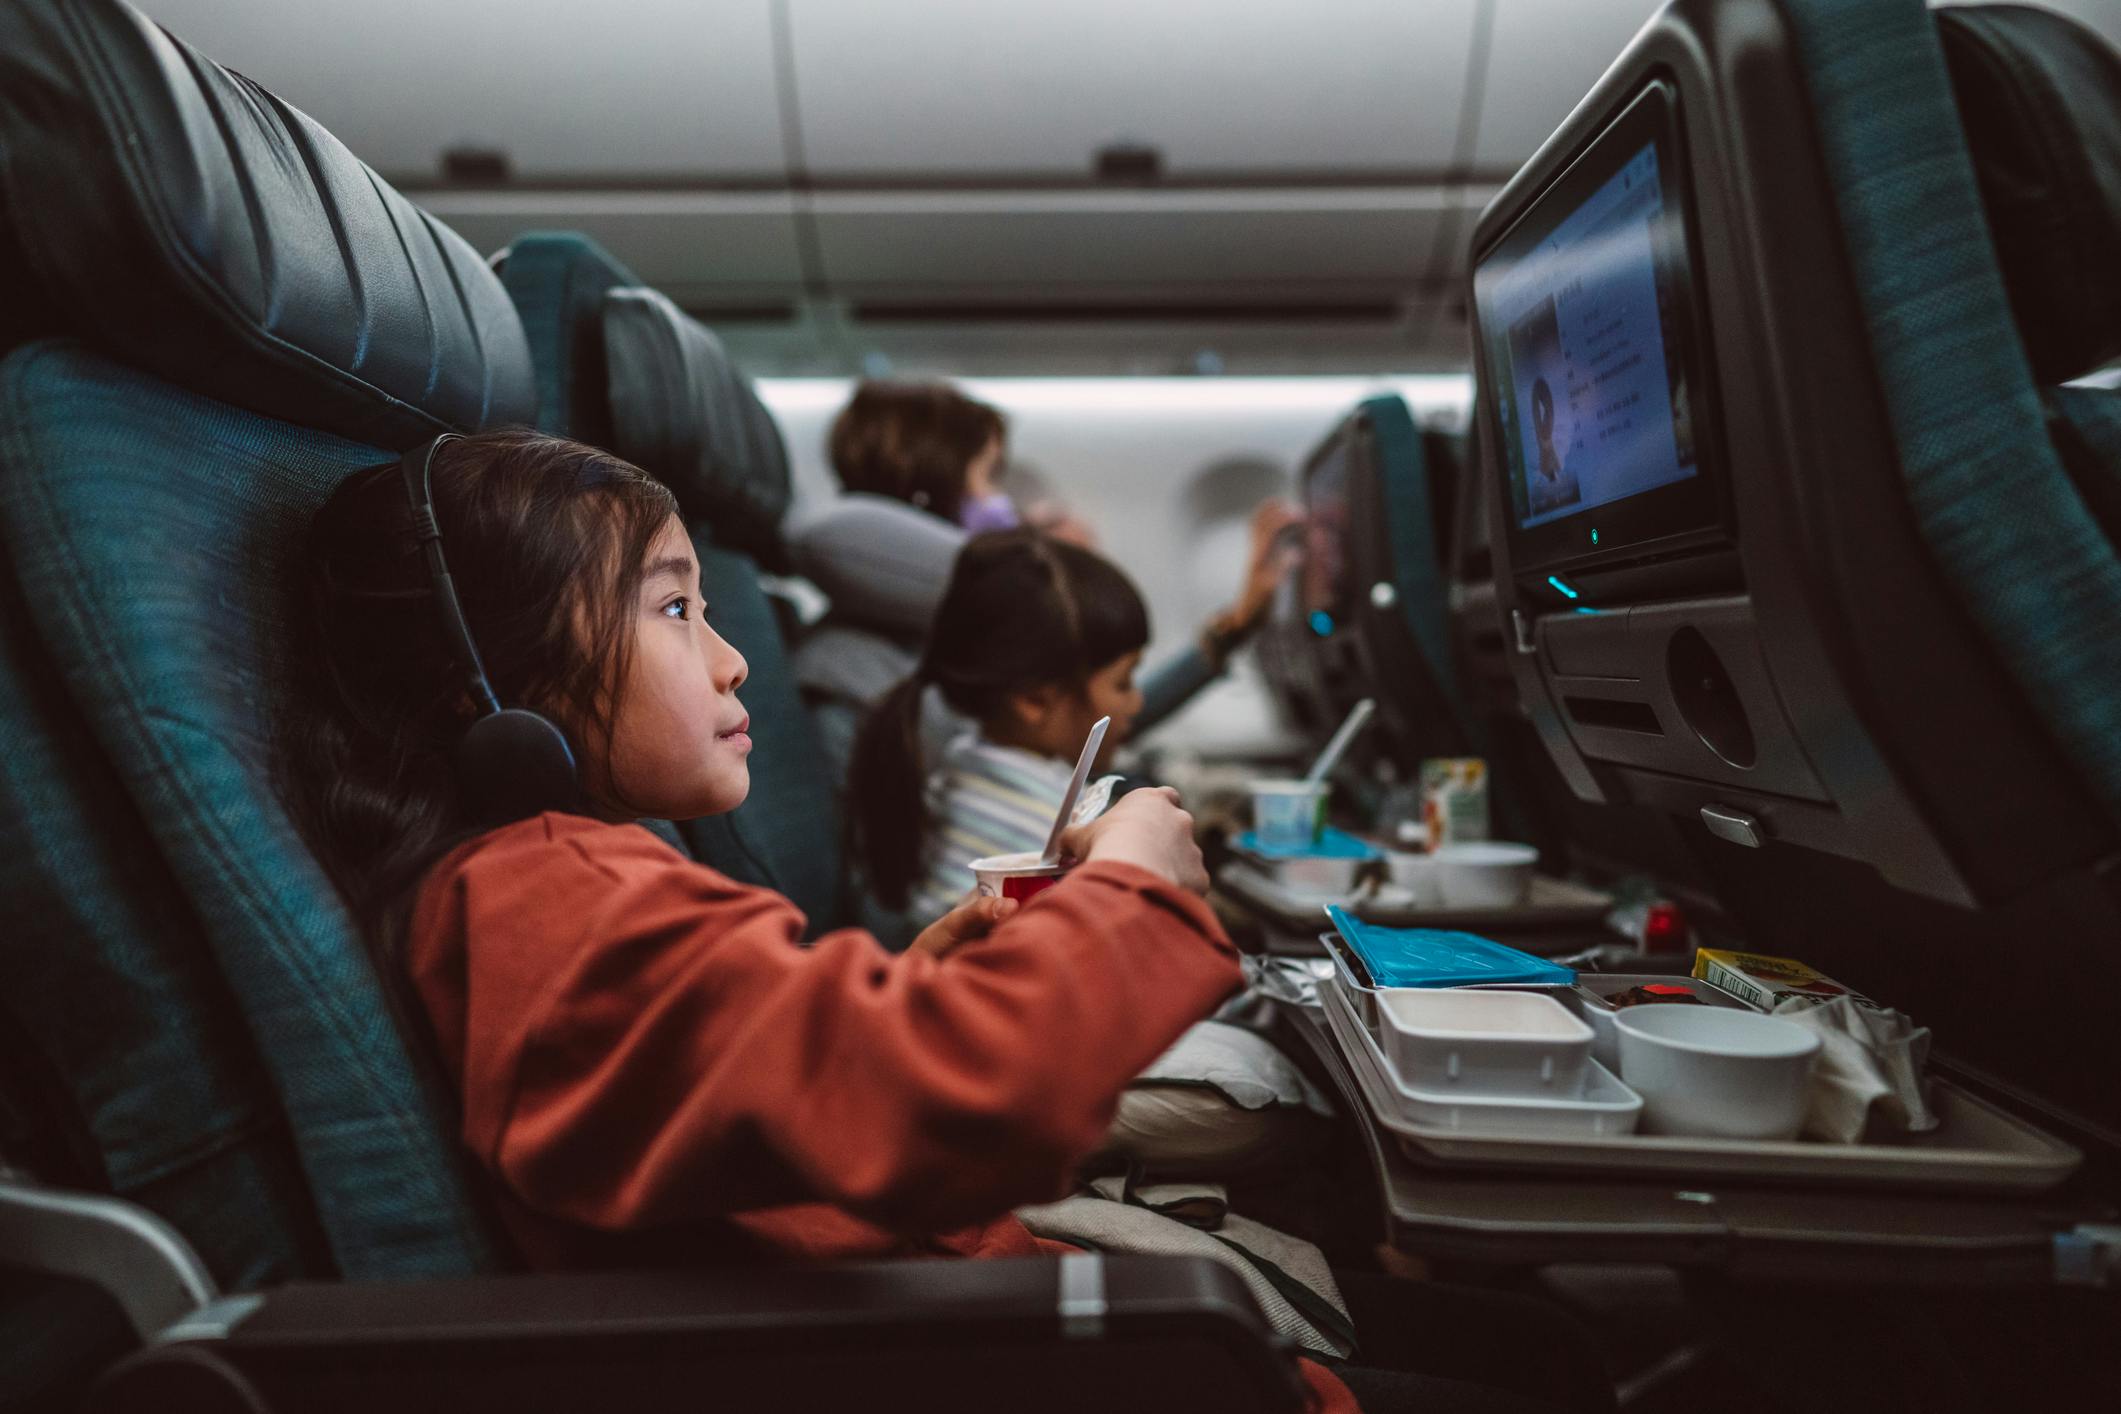 Little girl watching a movie on a flight